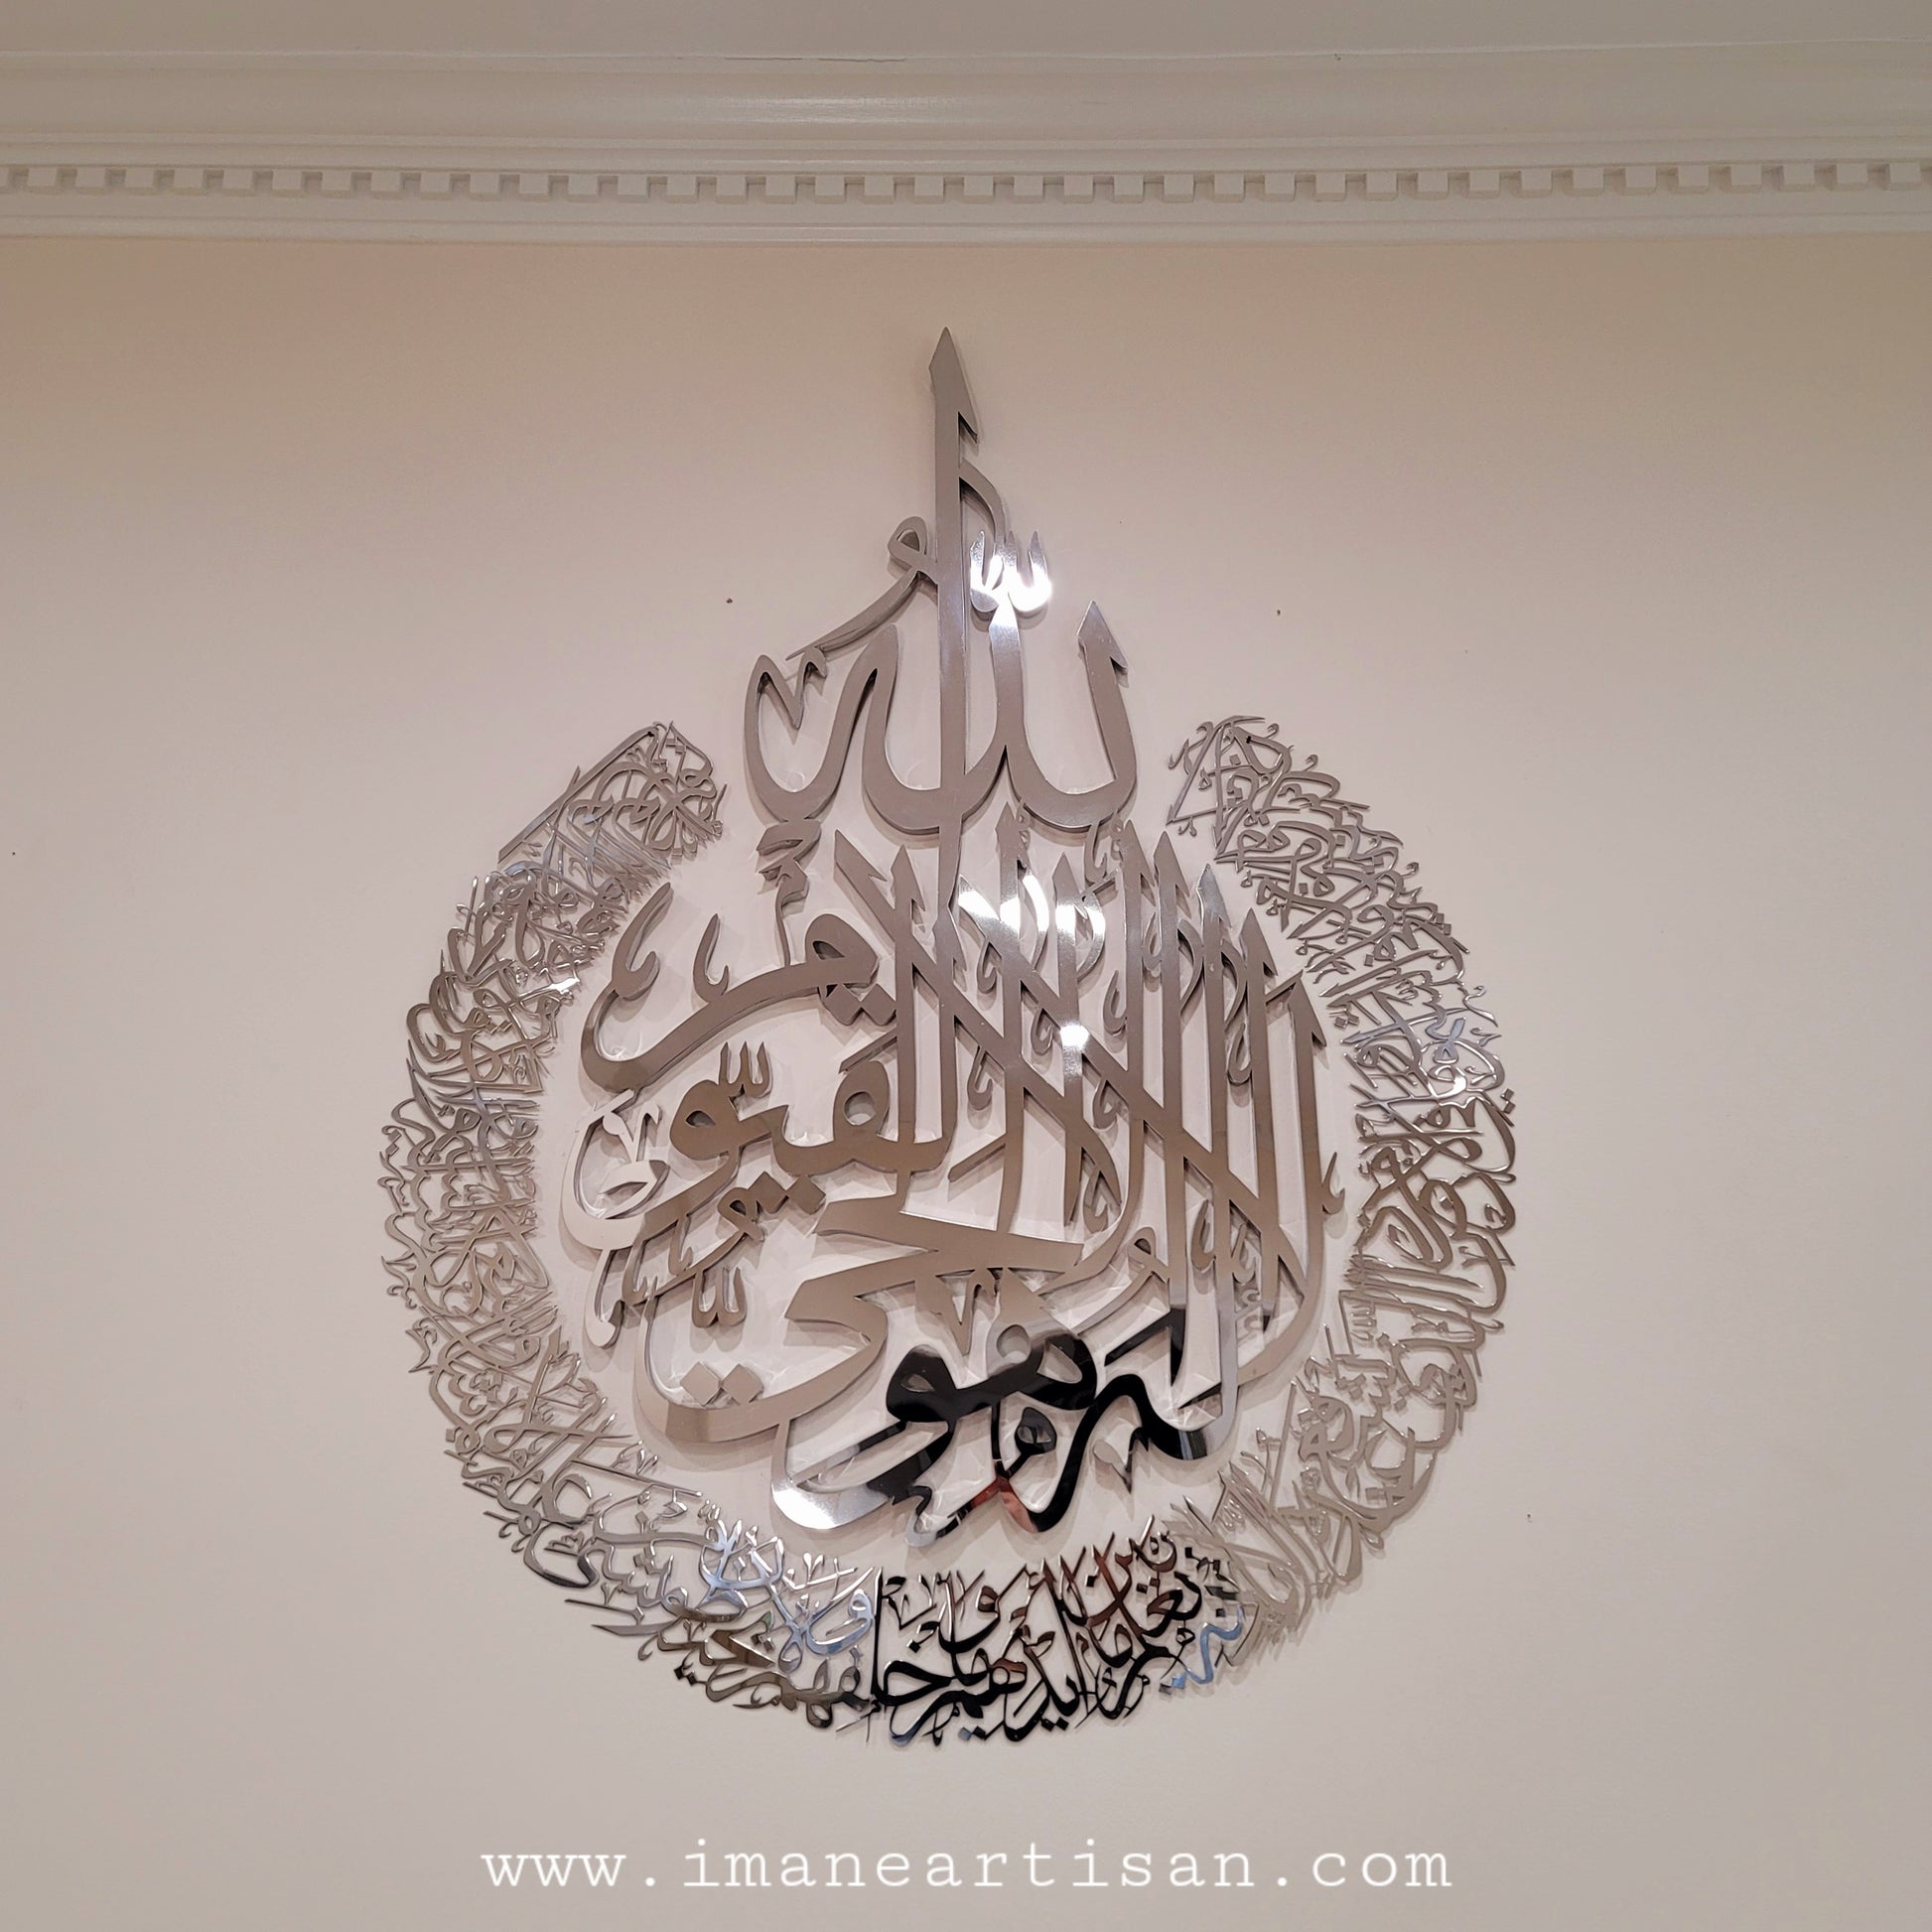 Islamic Wall Sticker Mirror Effect with Ayat Al-kursi Surah